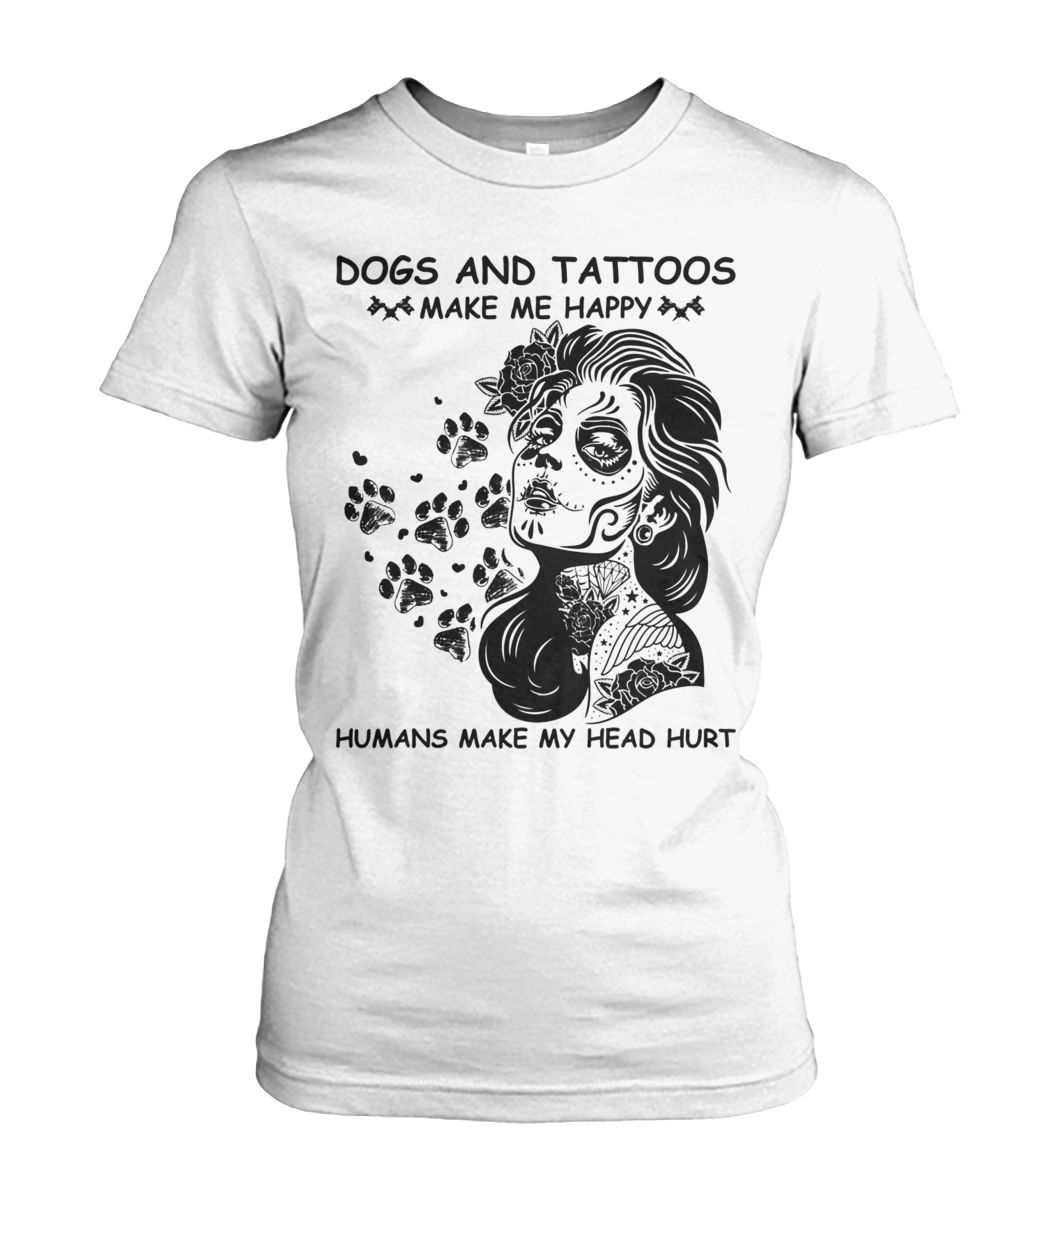 Dogs and tattoos make me happy humans make my head hurt women's crew tee